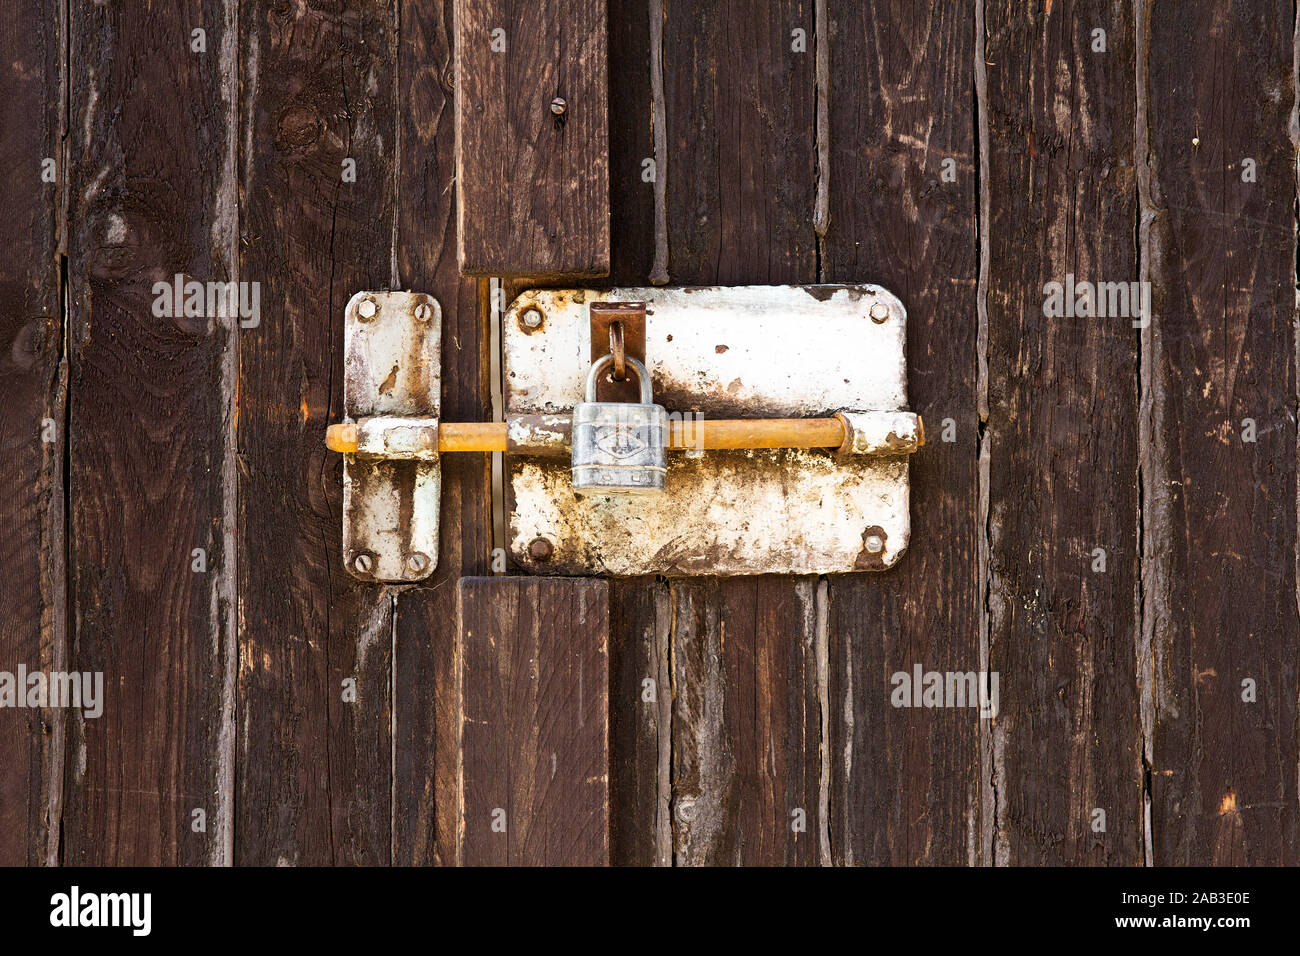 Verriegelung mit Vorhängeschloss an einem Holztor |Locking with a padlock on a wooden gate| Stock Photo